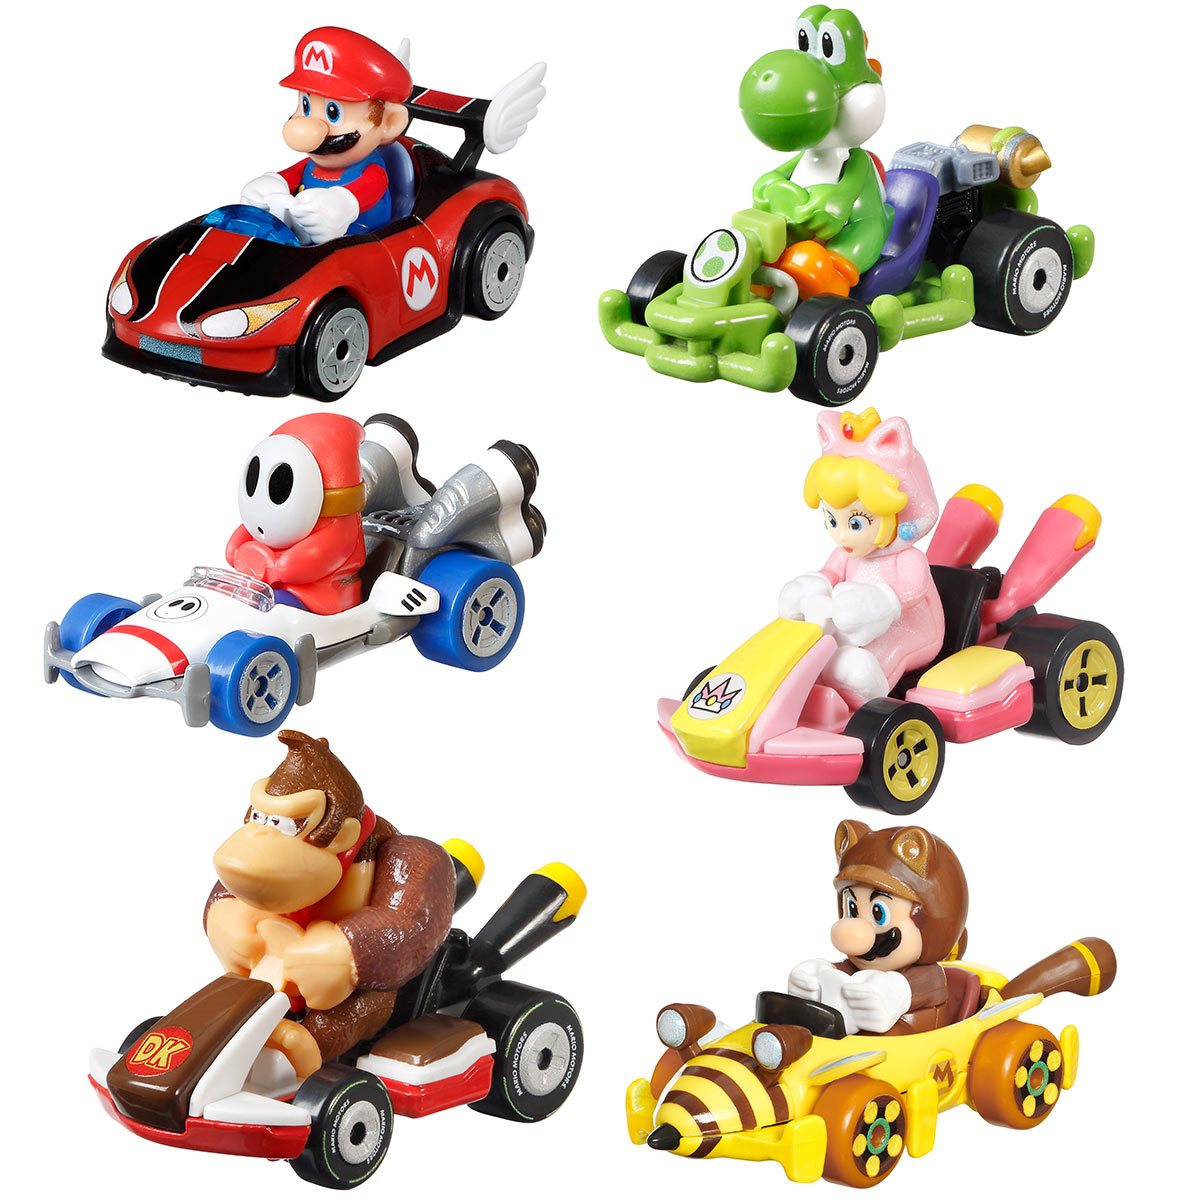  Hot Wheels GBG26 Mario Kart 1:64 Die-Cast Mario with Standard  Kart Vehicle : Toys & Games